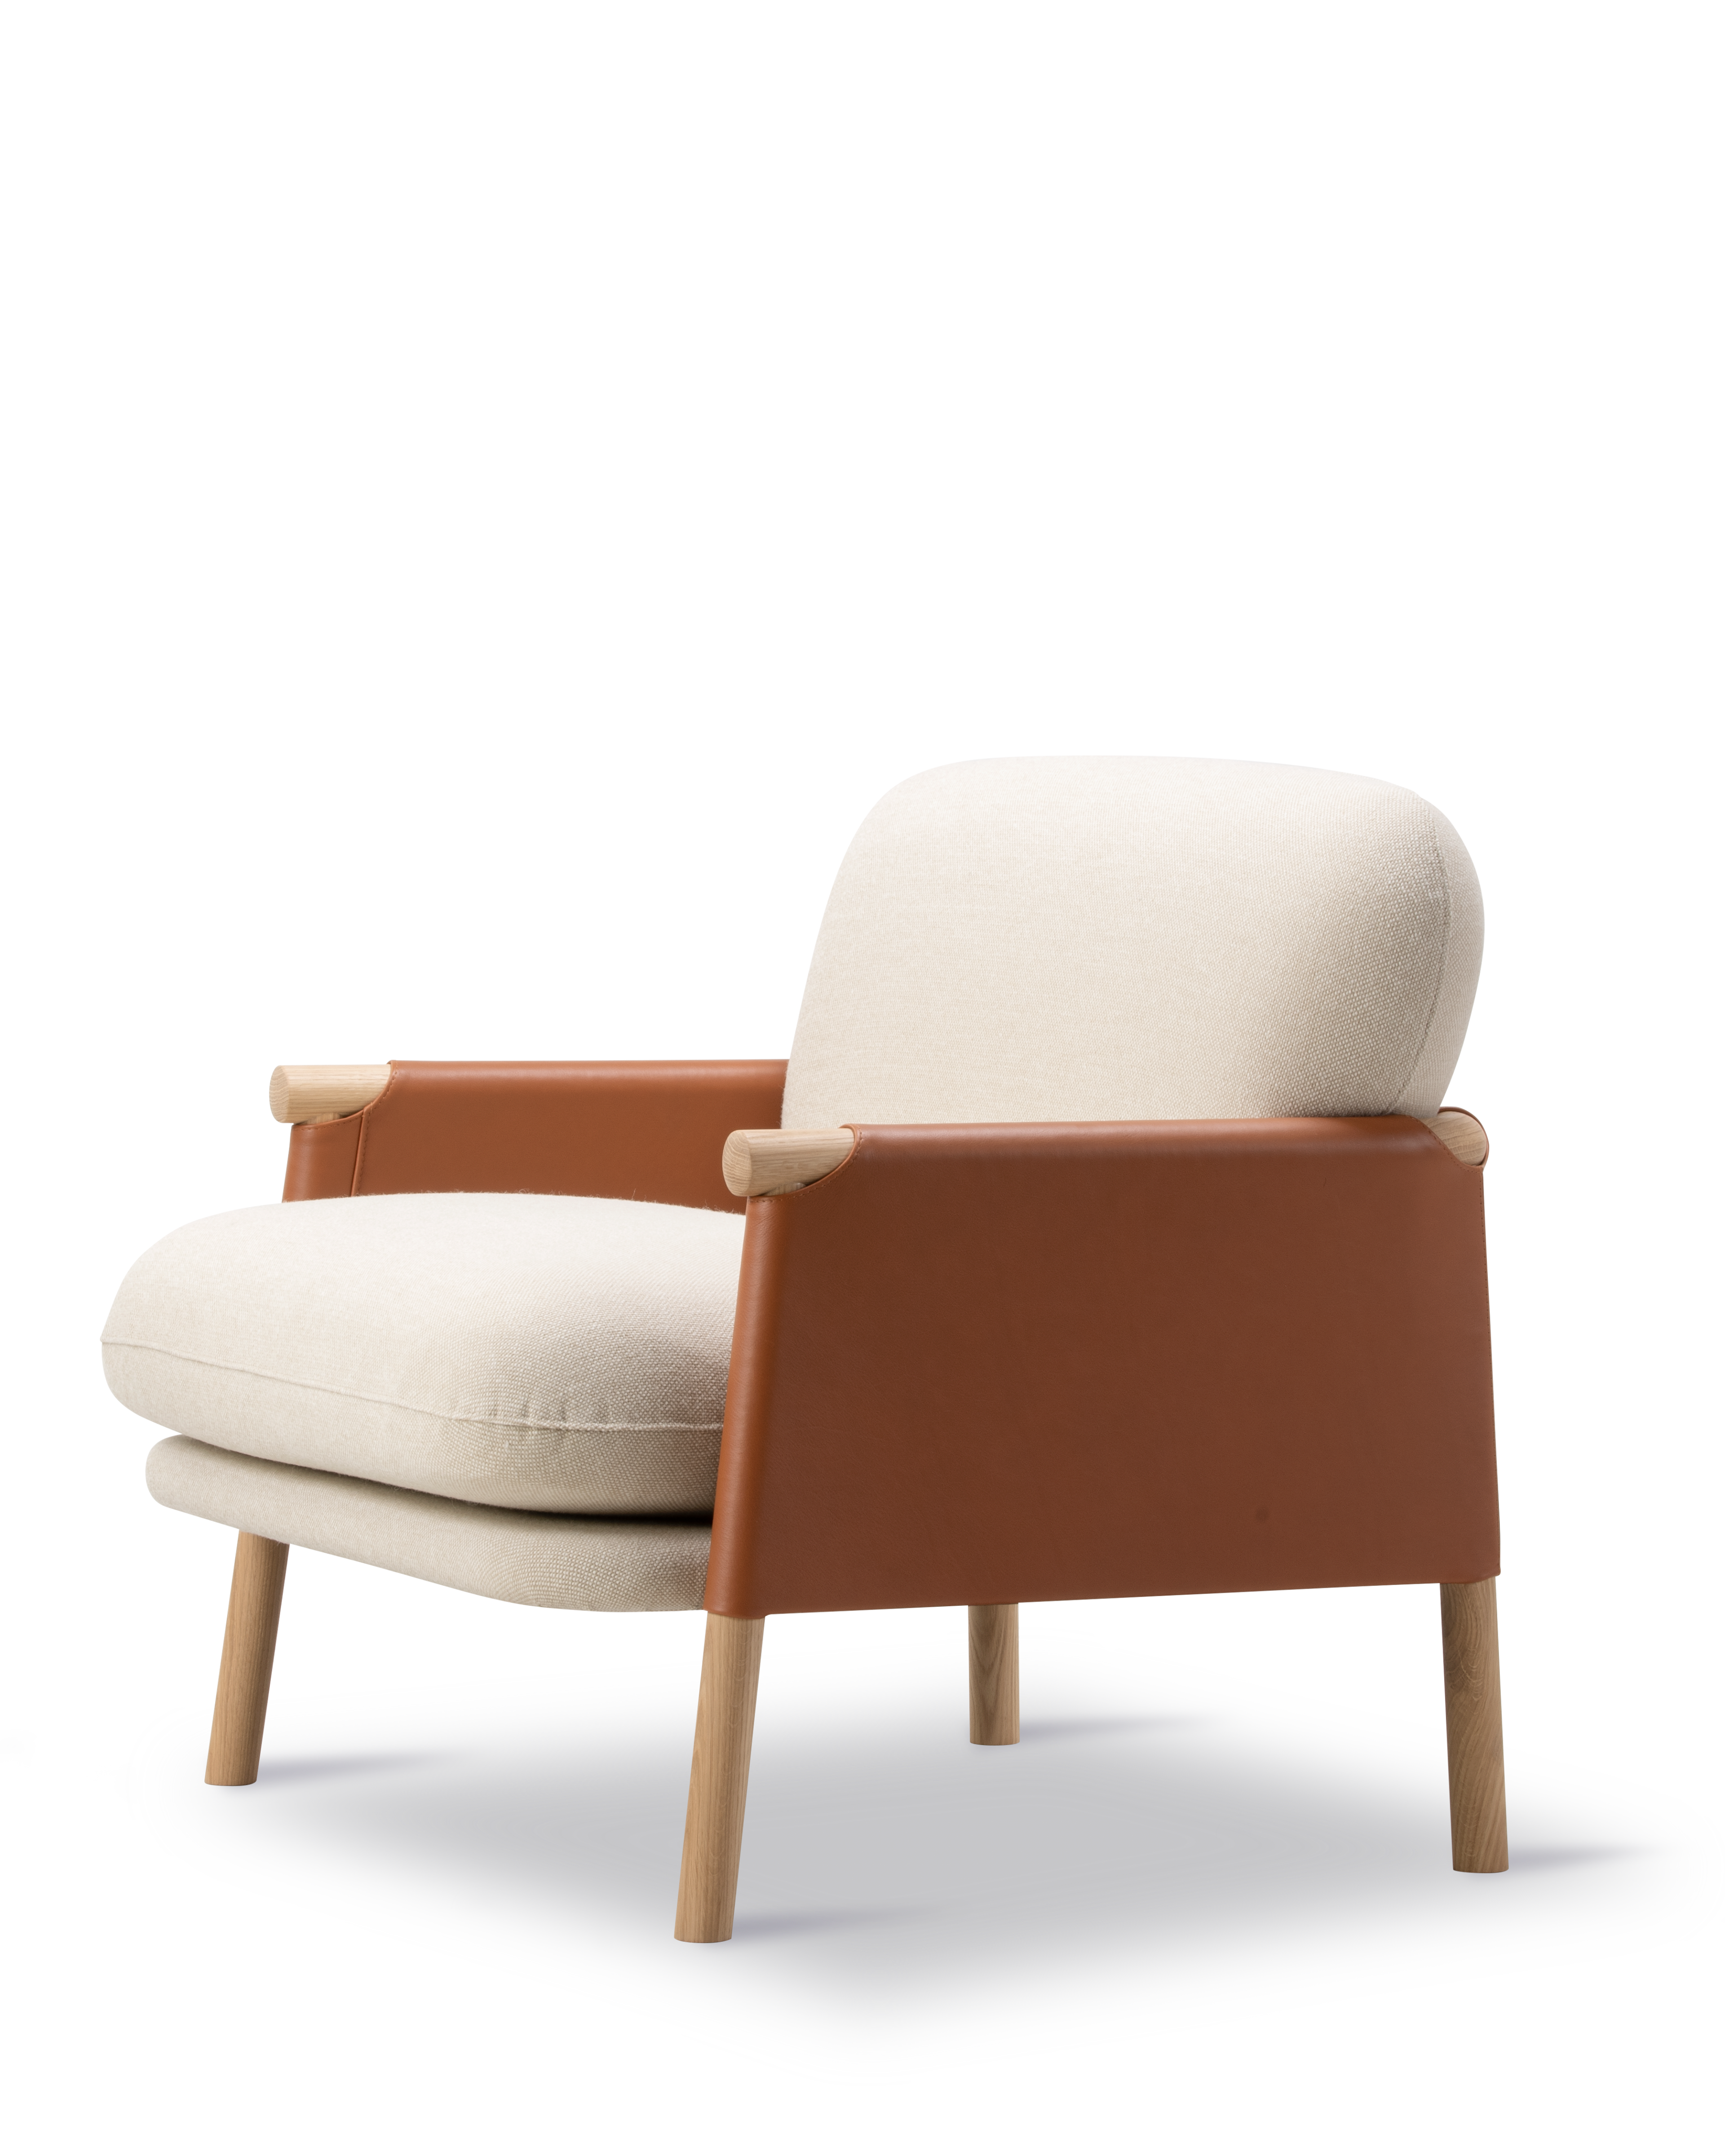 Savannah Lounge Chair - Læder 95 Max / Hallingdal 200 / Eg lys olie